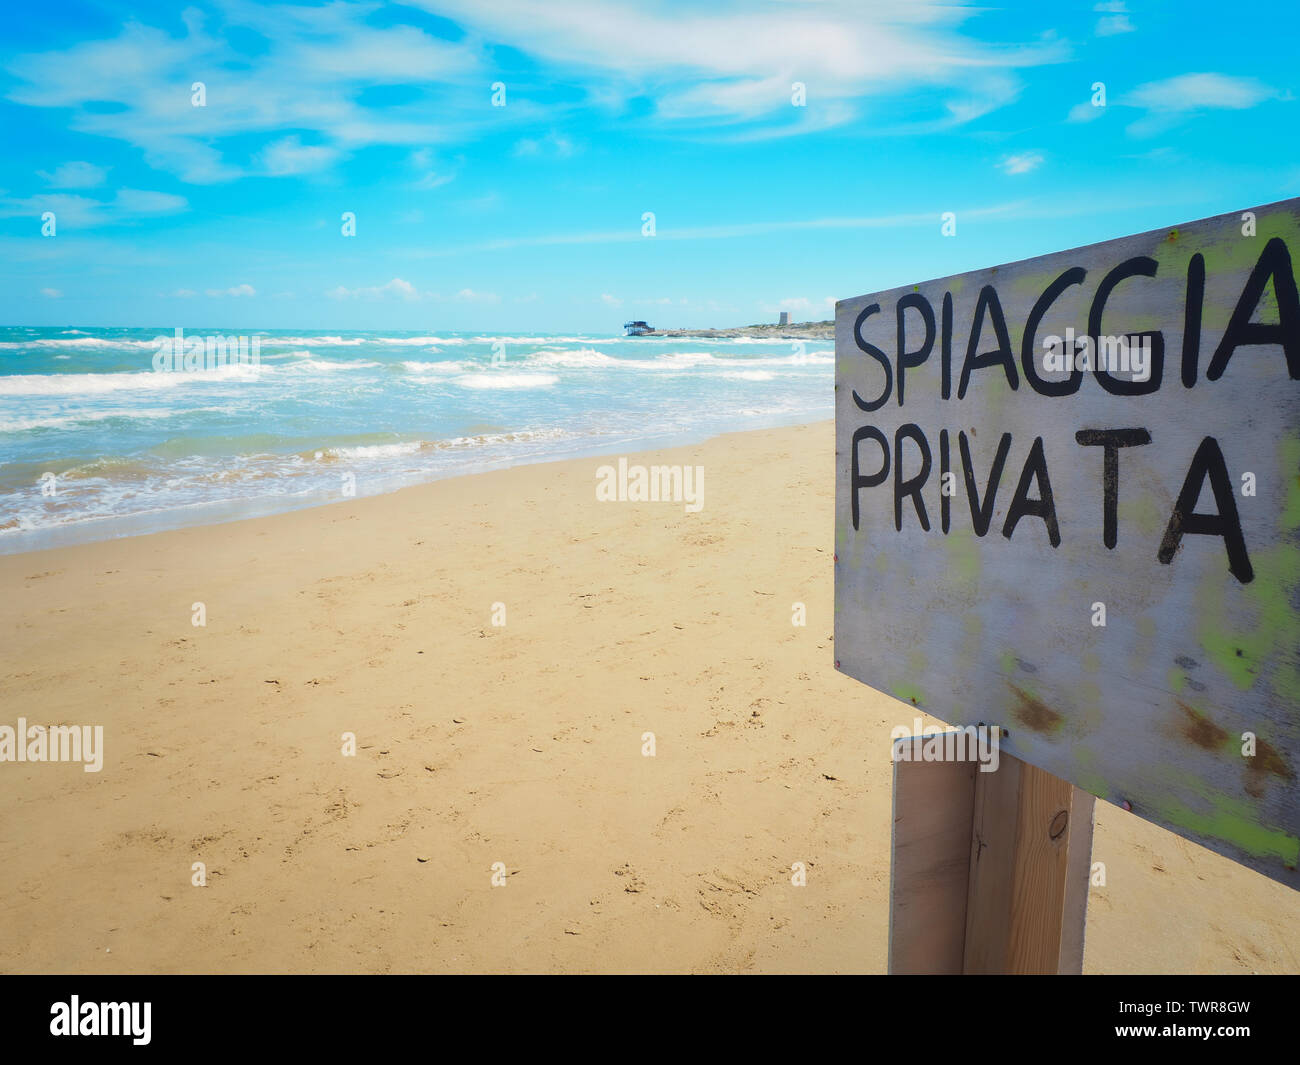 Spiaggia Privata ( translation Private Beach) sign on the beach Stock Photo